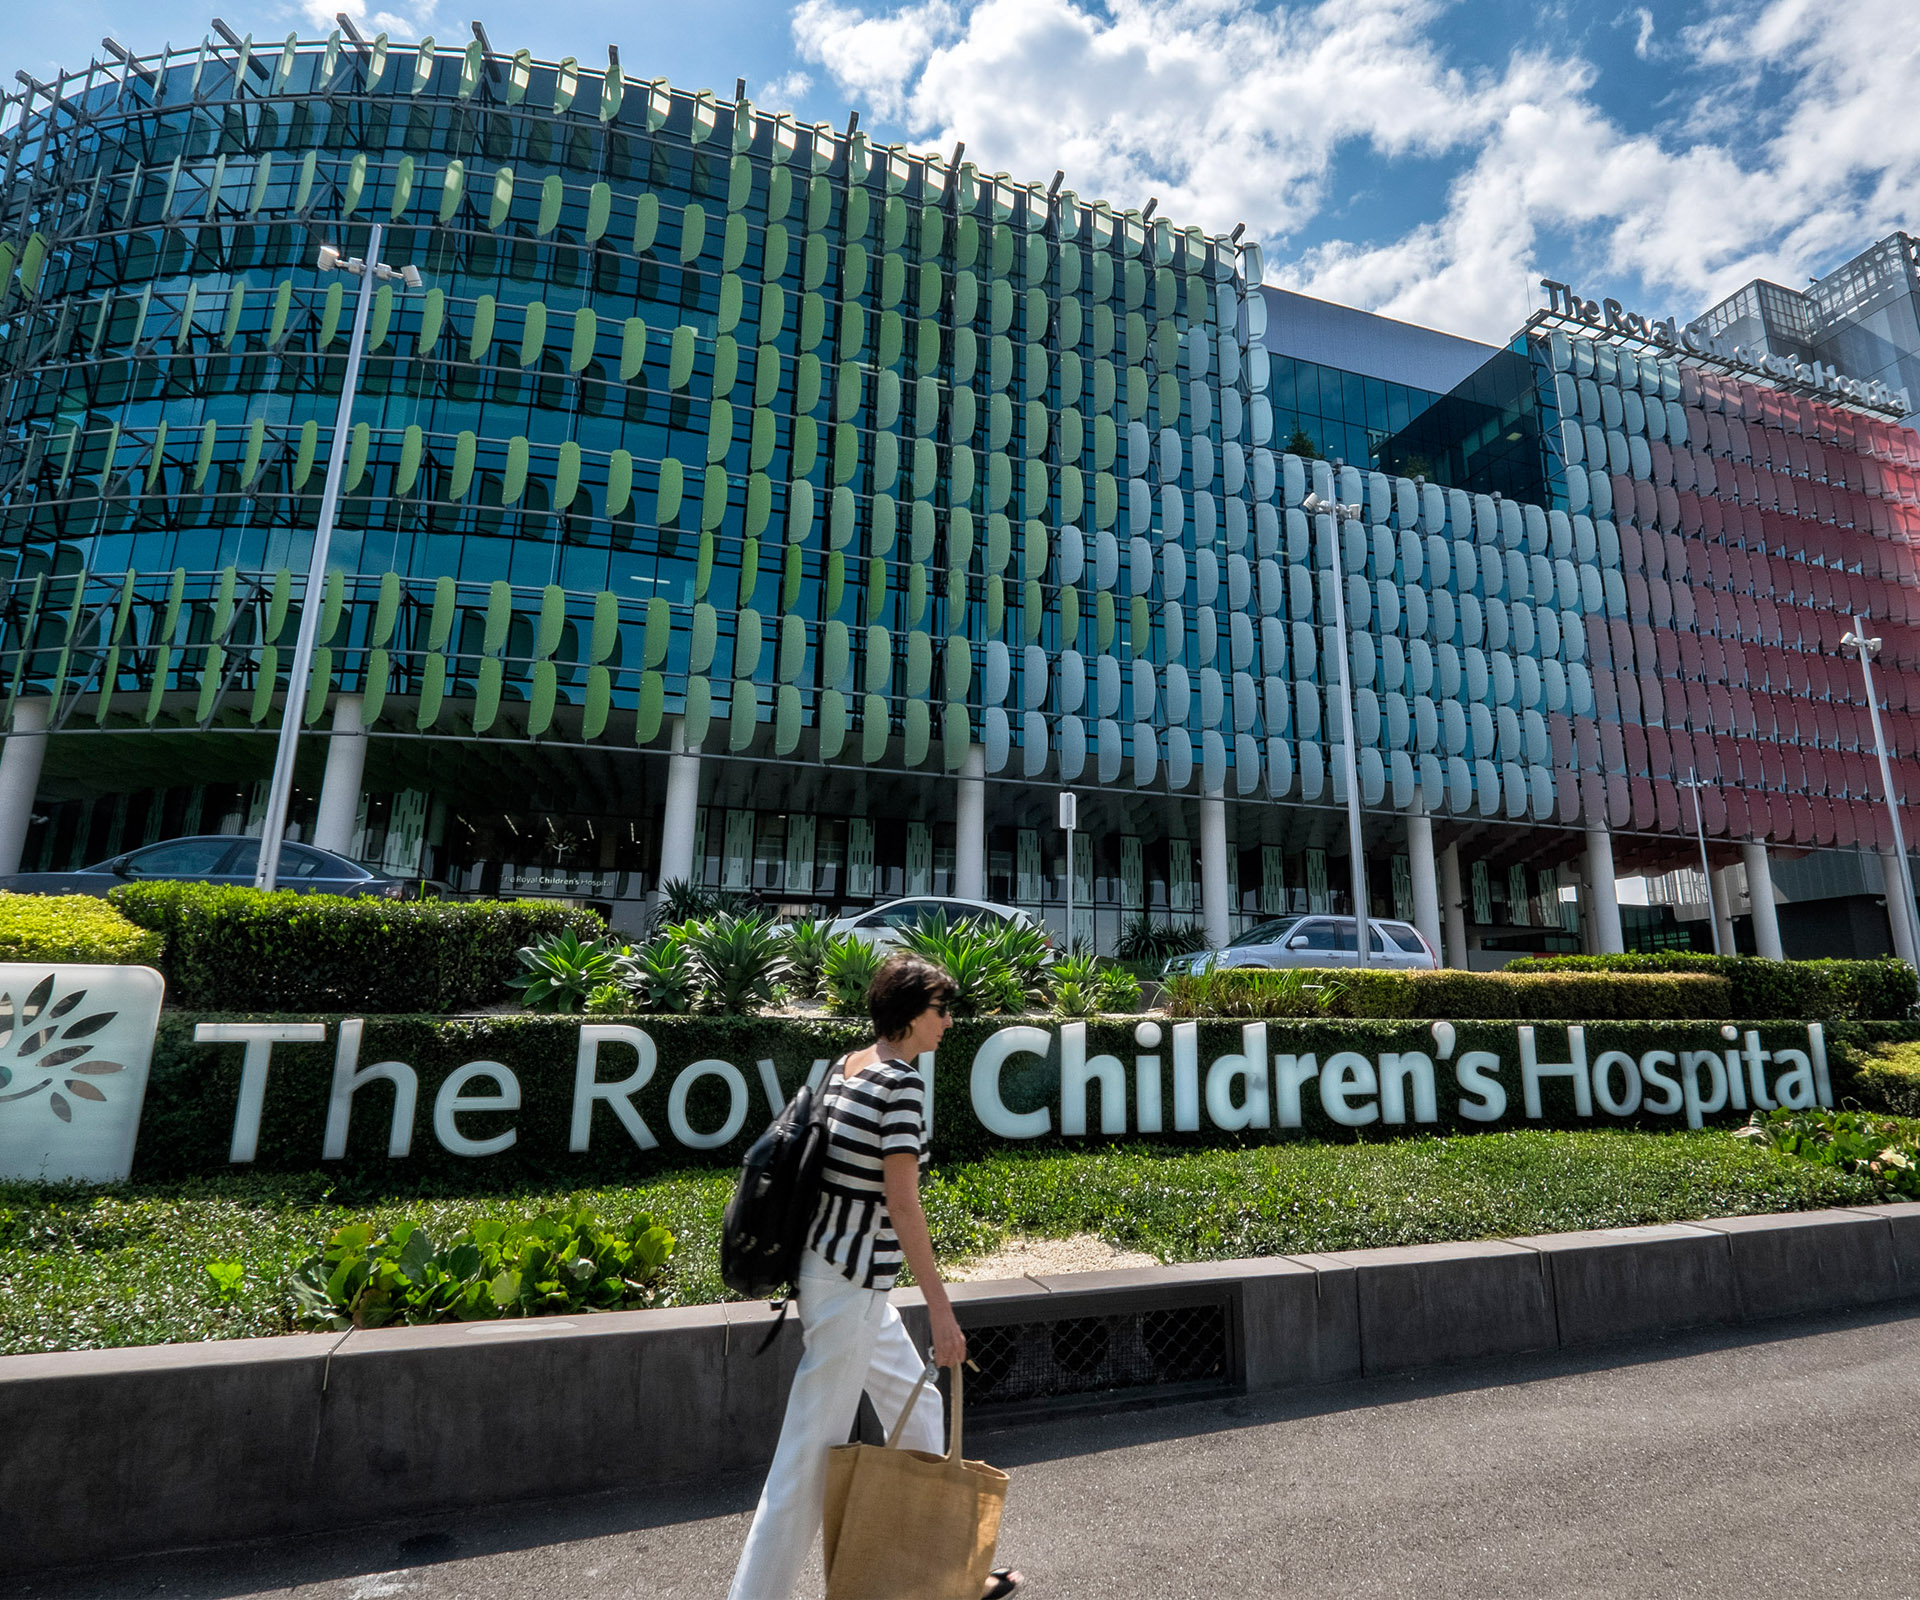 Royal Children’s Hospital refusing to discharge children back into detention